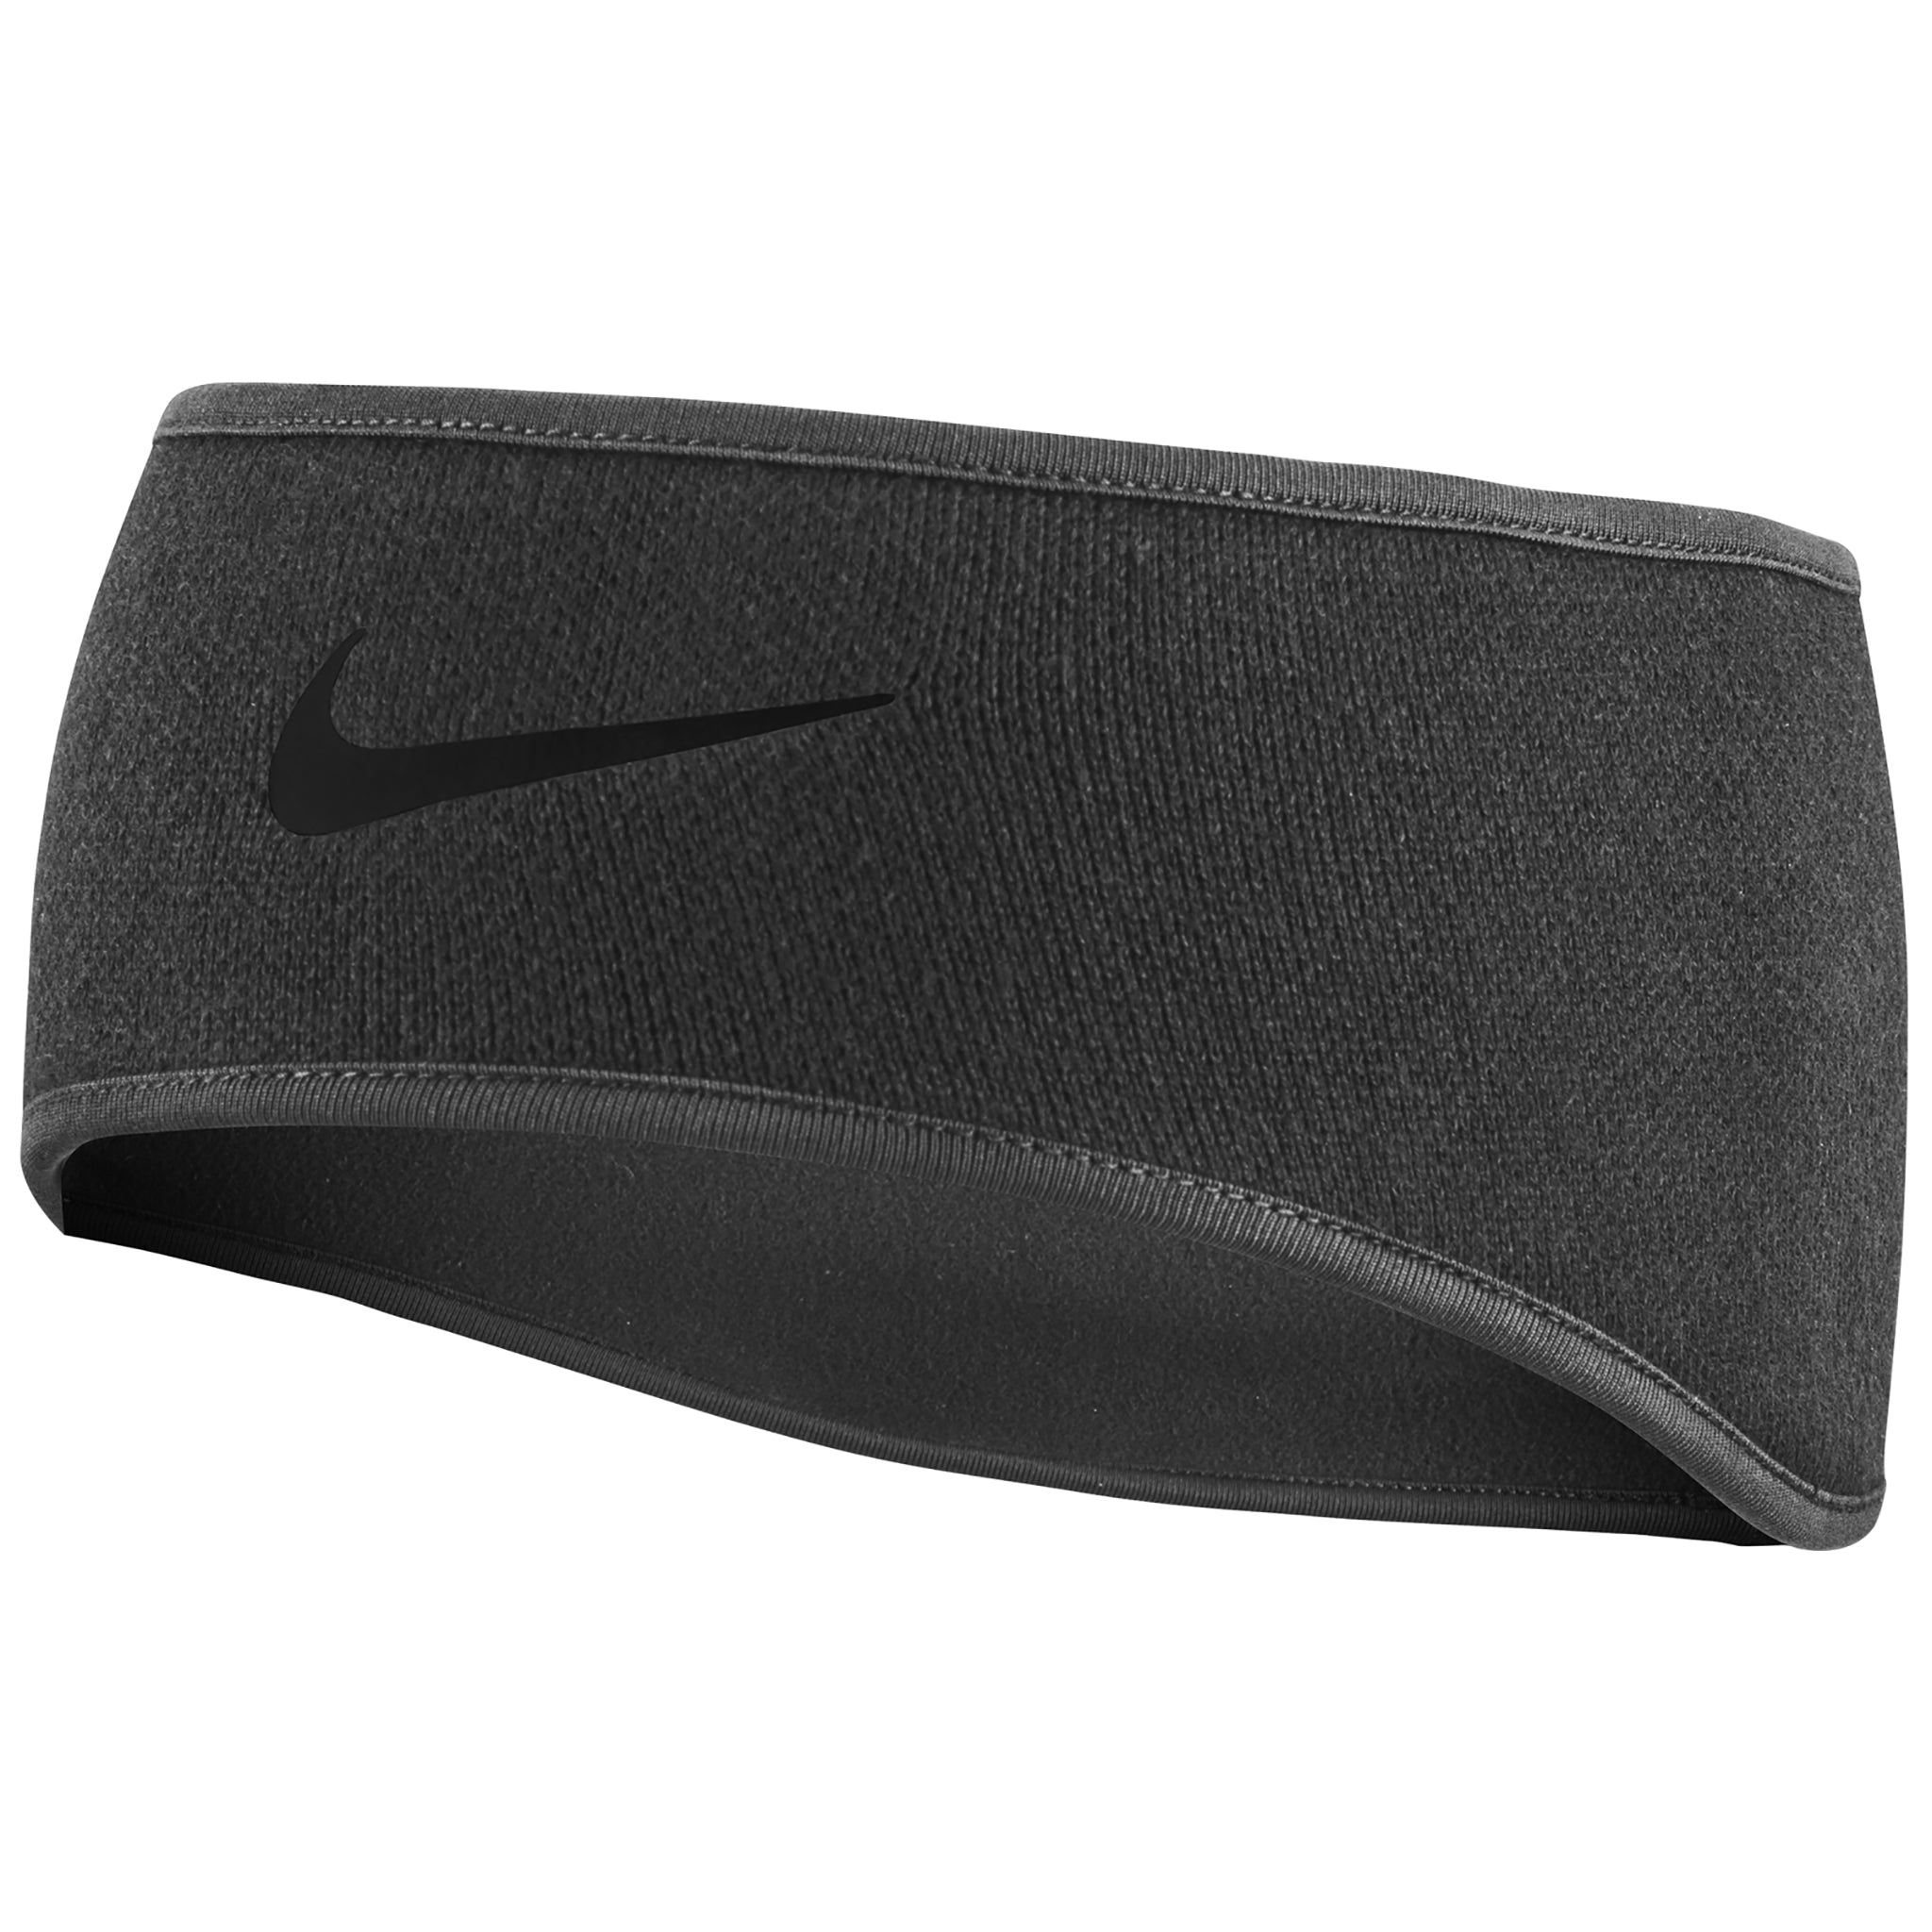 Nike Knit Headband sports headband for cold weather - Soccer Sport Fitness